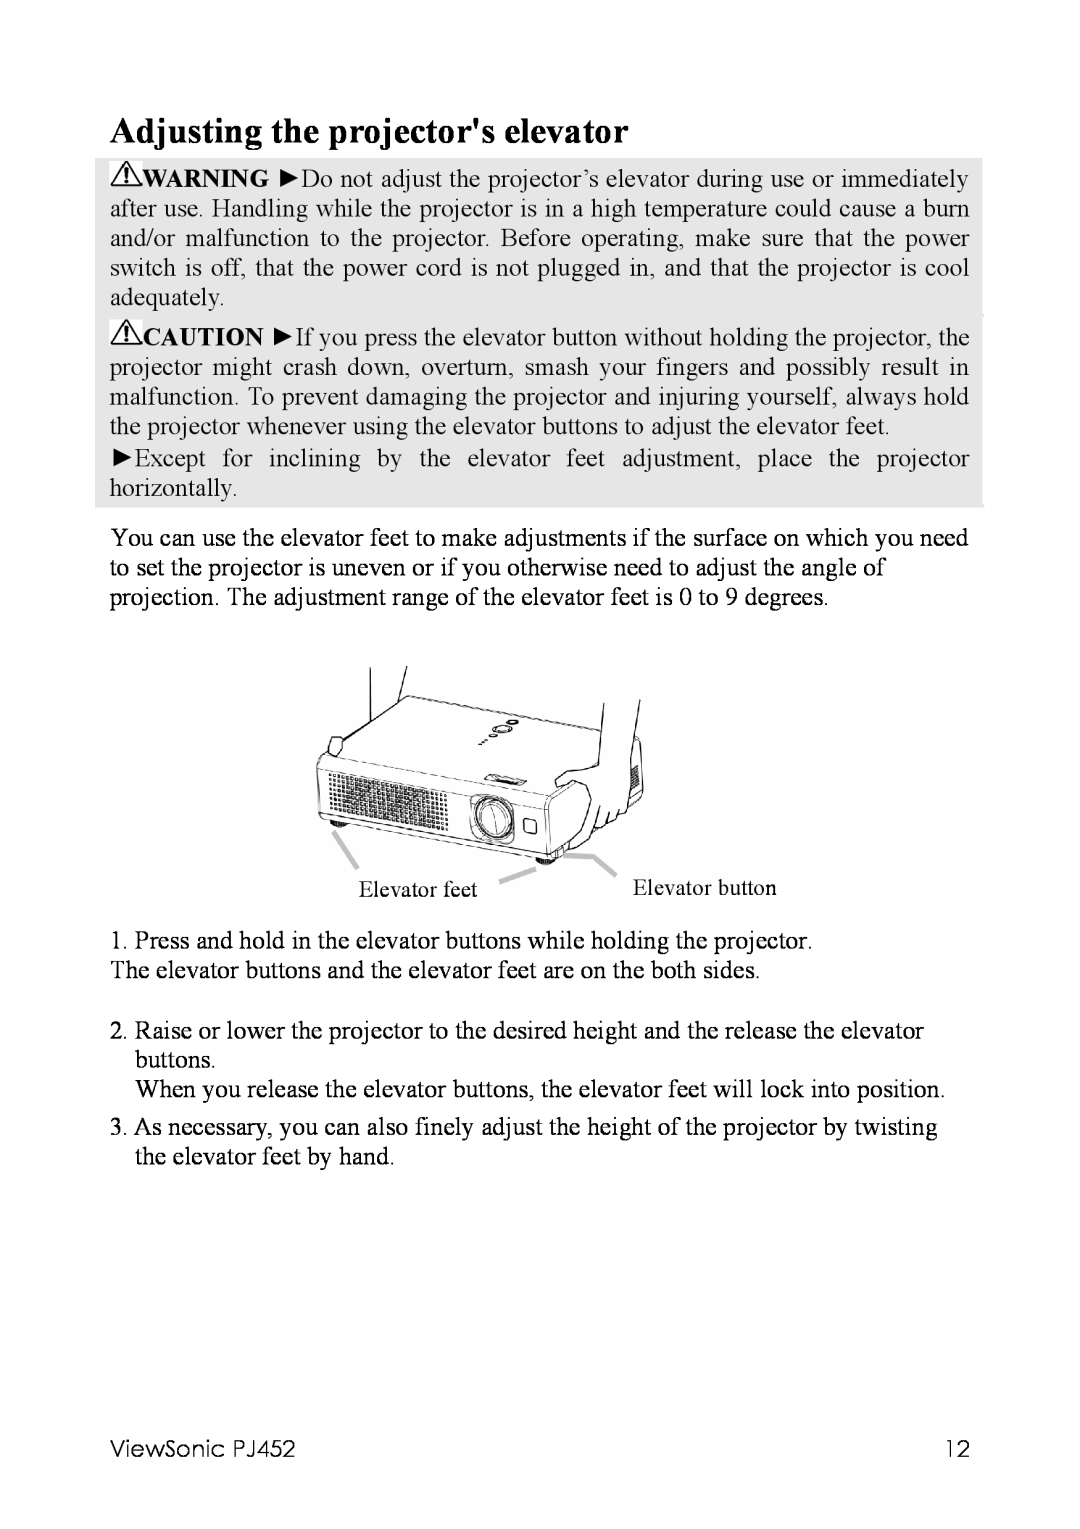 ViewSonic PJ452 manual Adjusting the projectors elevator, Elevator feet, Elevator button 